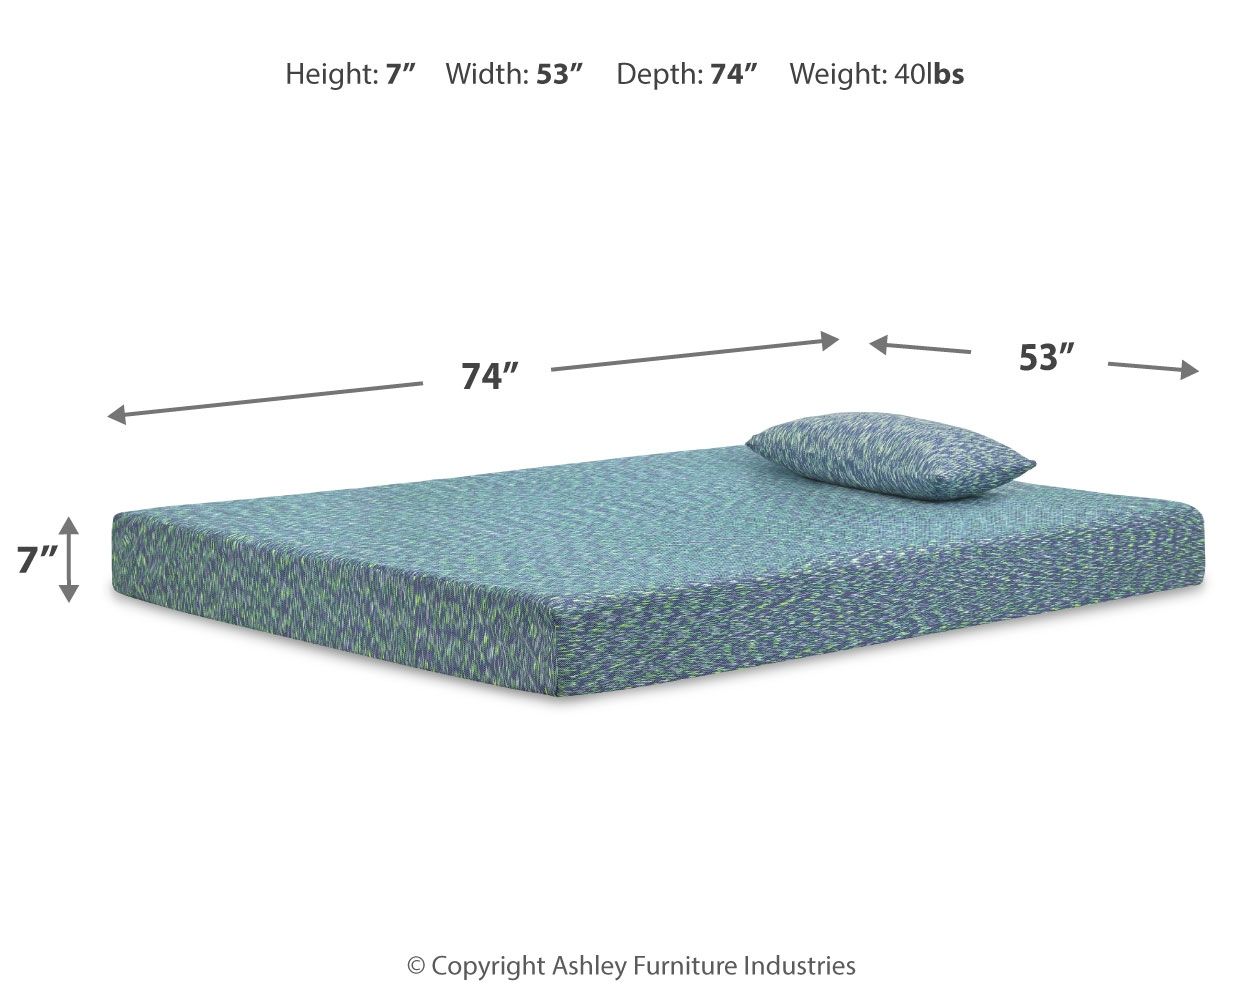 IKidz - Firm Mattress And Pillow - Tony's Home Furnishings